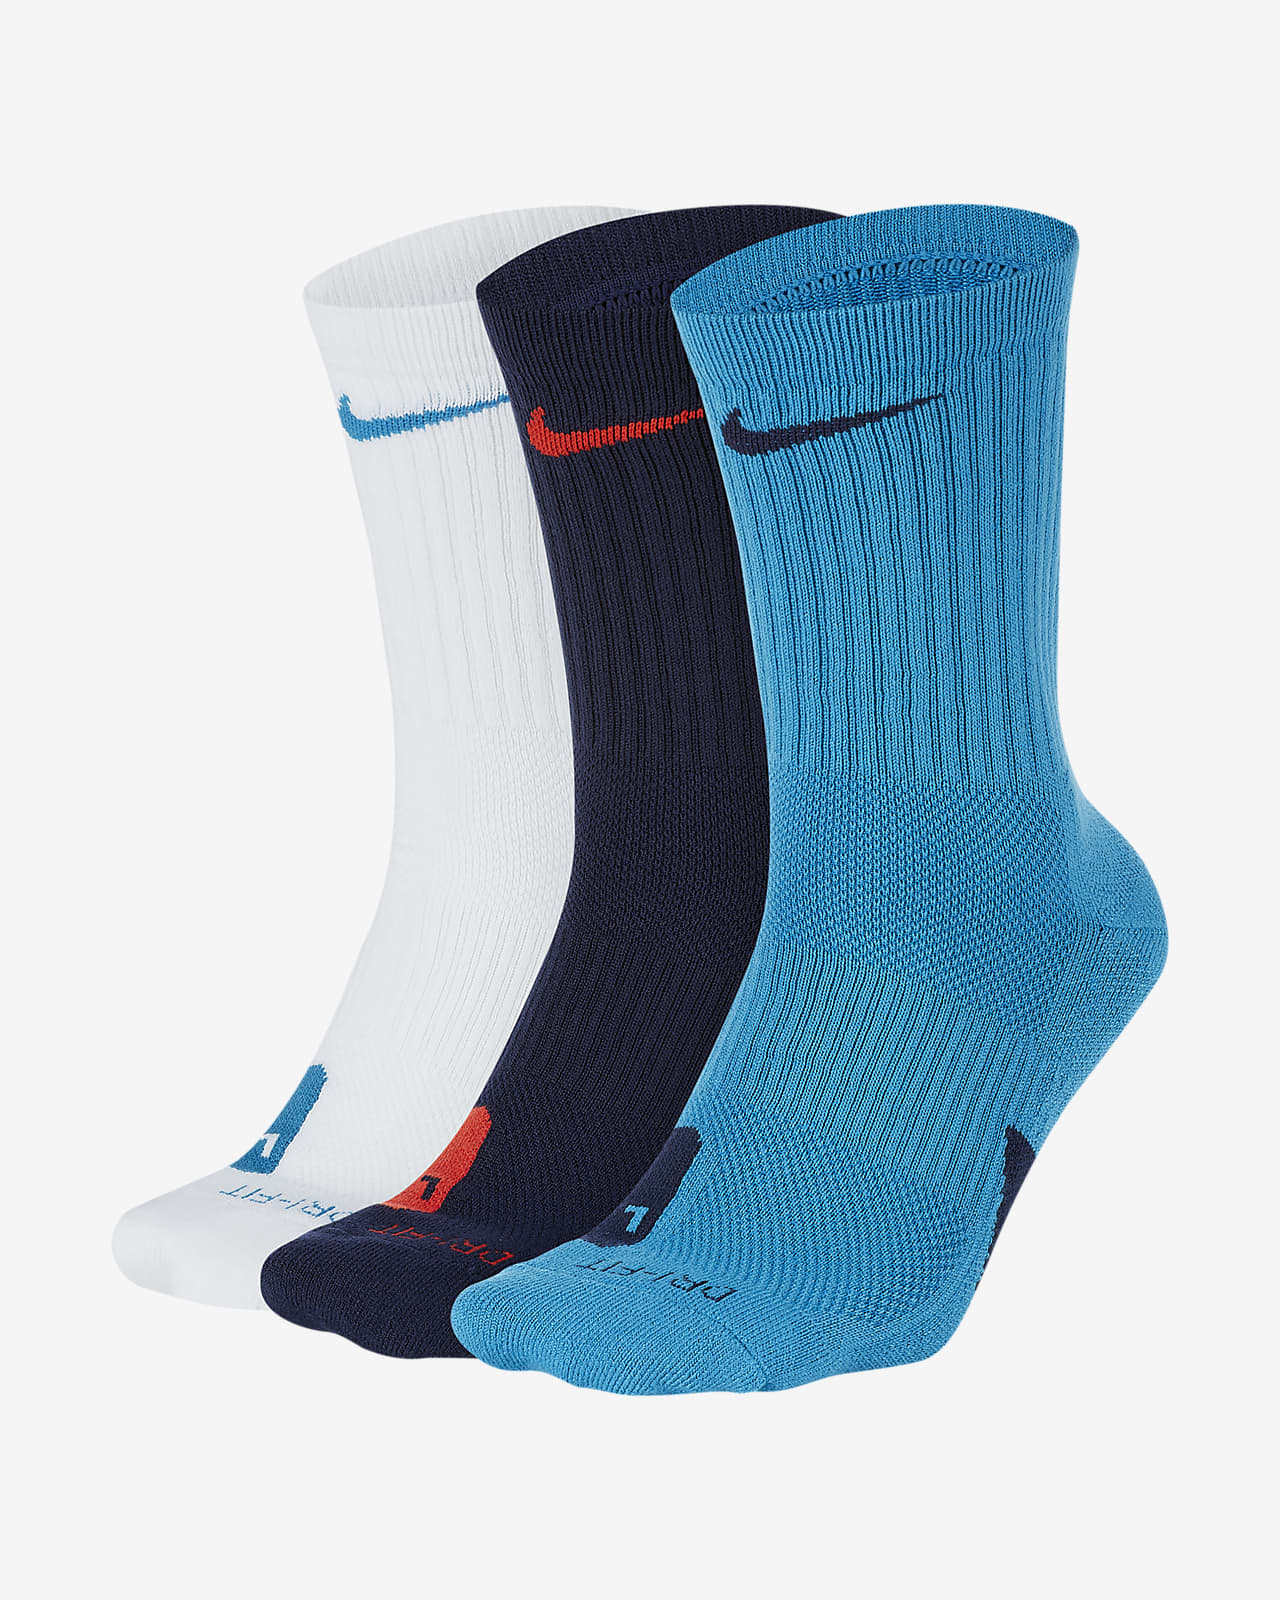 Nike Elite Basketball Crew Socks (3 